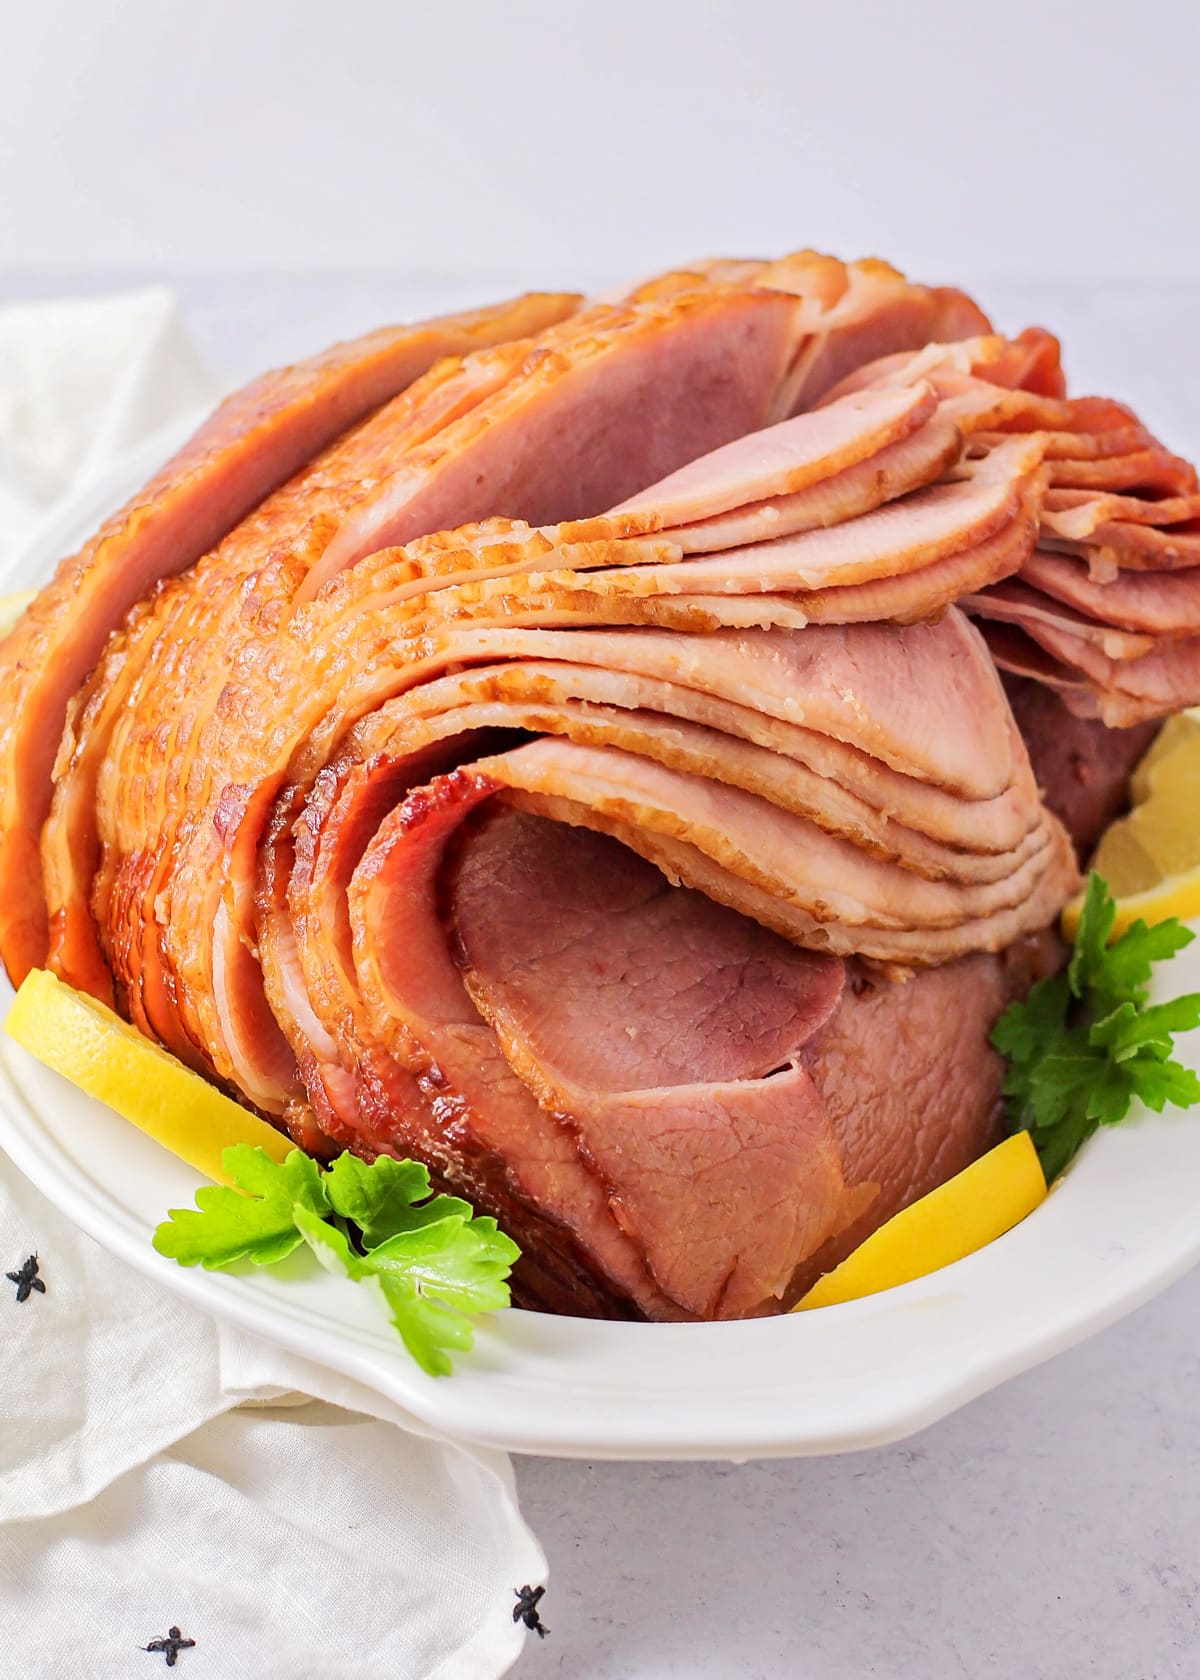 Brown sugar glazed ham for serving with homemade dinner rolls.